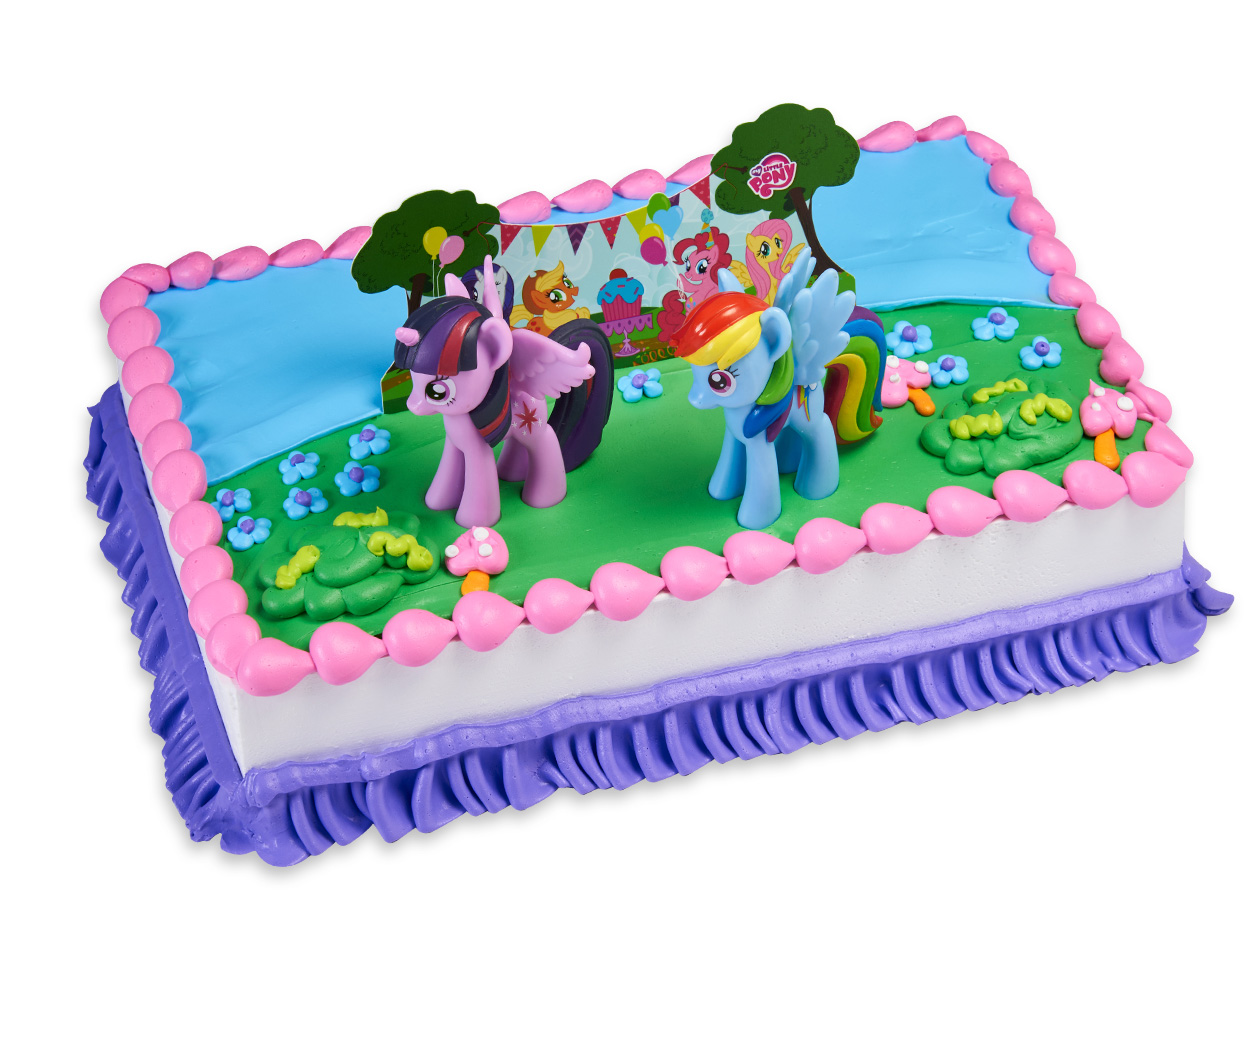 Airplane themed kids birthday cake - Three Sweeties